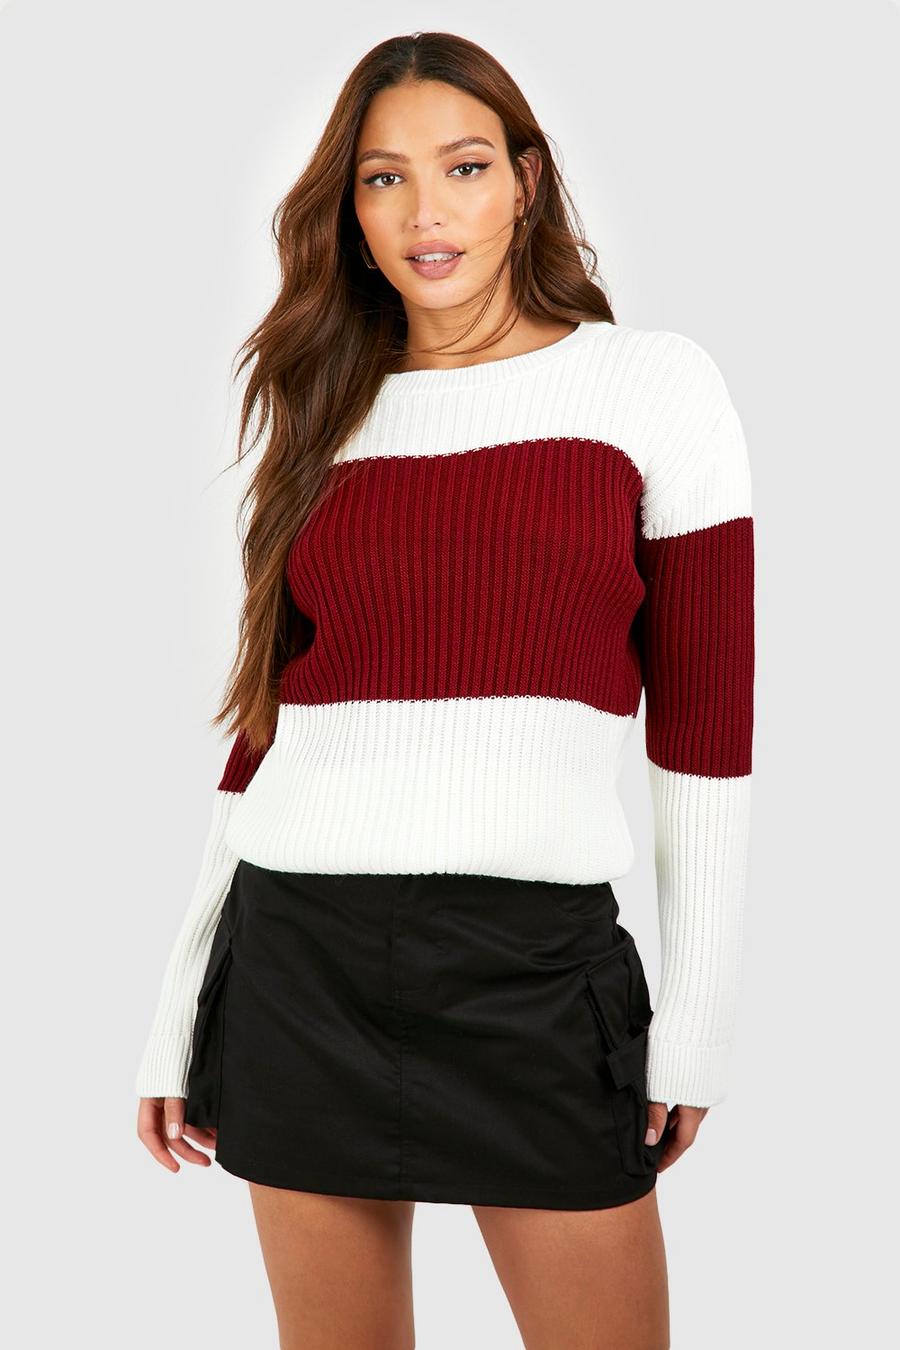 Berry Sweater Knit Sleep Top